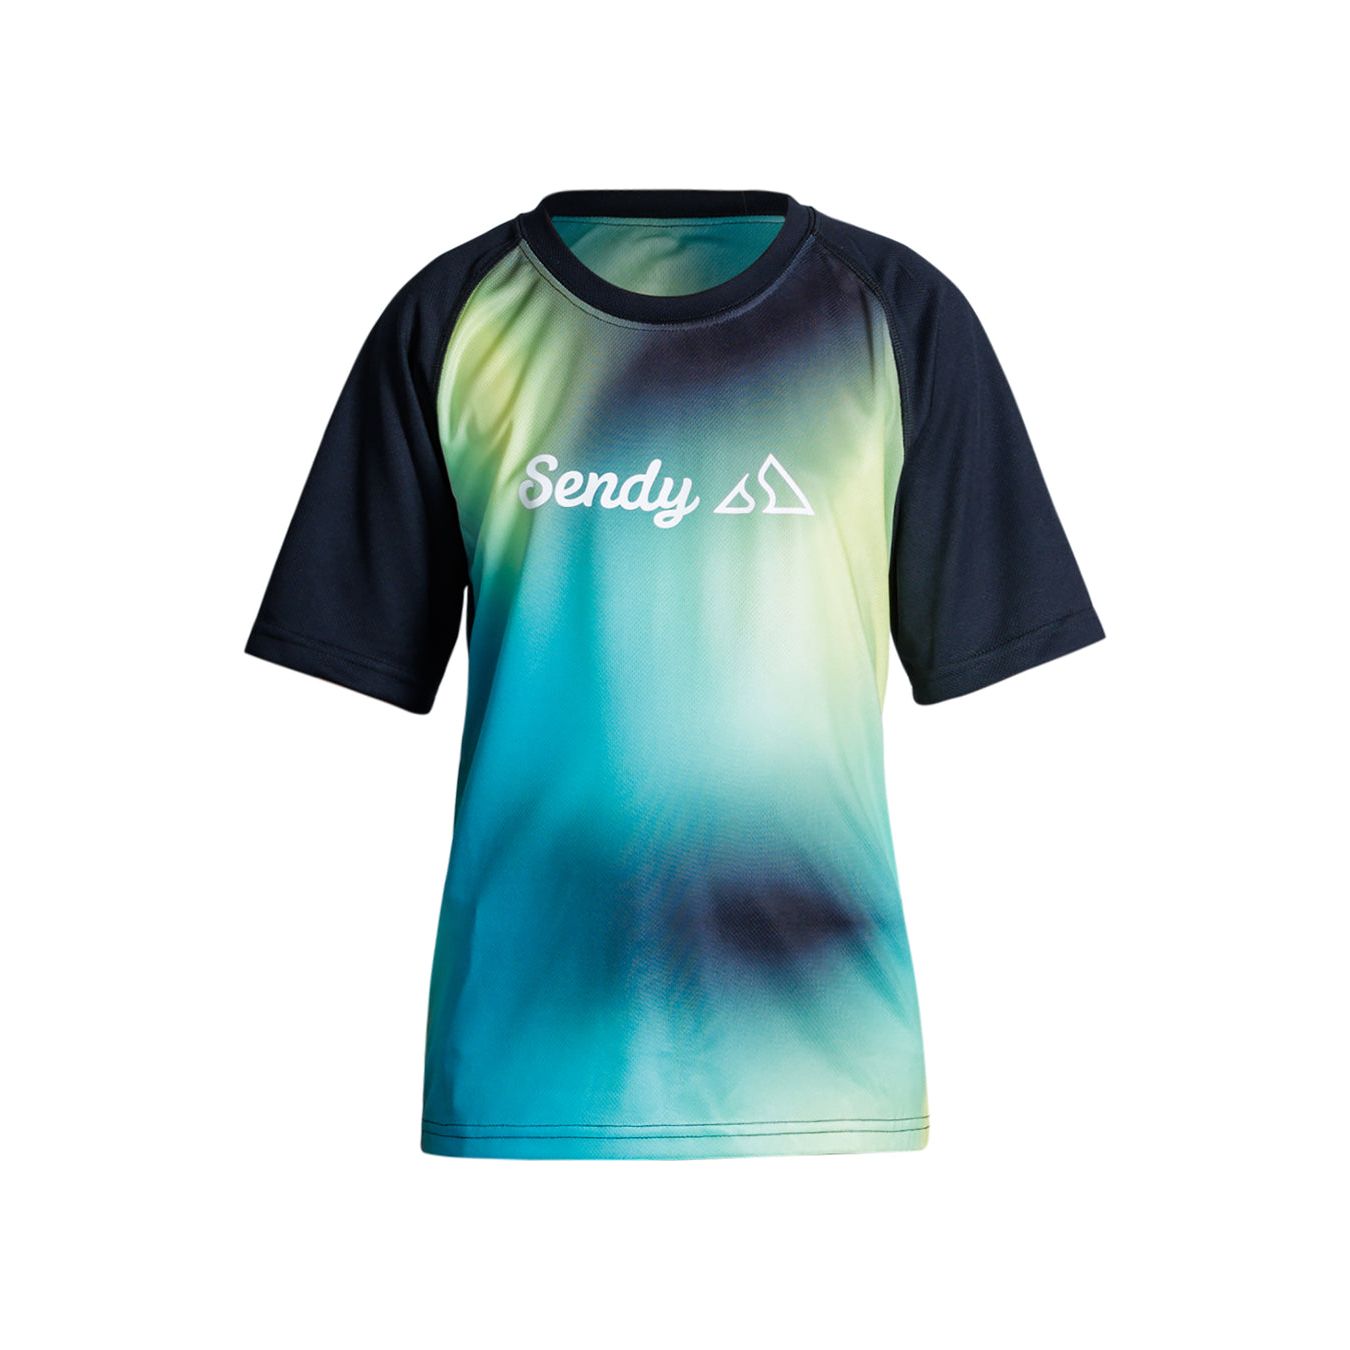 Sendy Send It Short Sleeve Youth Jersey - Youth L - Swirl